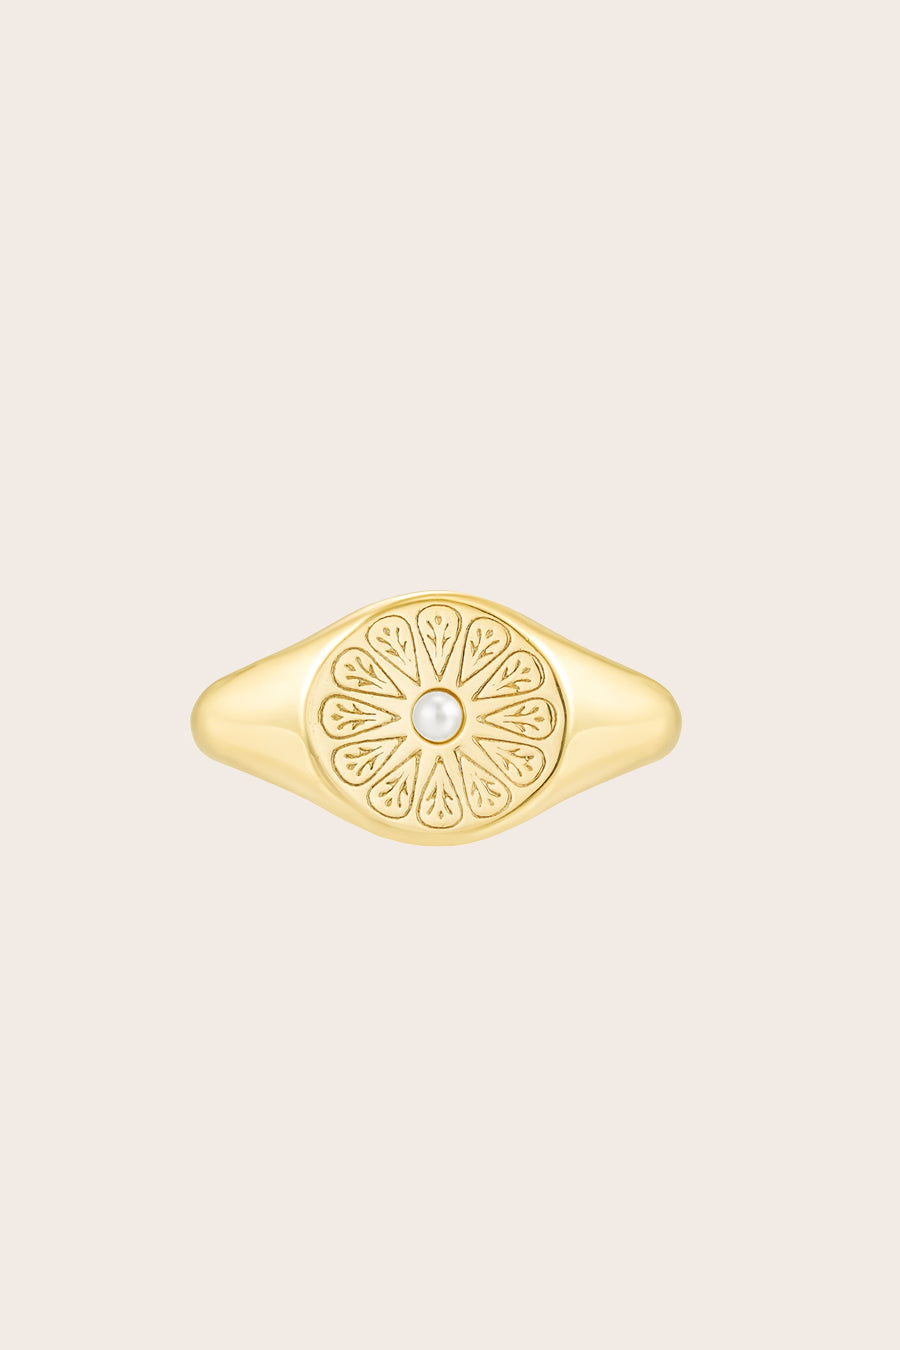 Gold June Pearl Signet Birthstone ring on cream